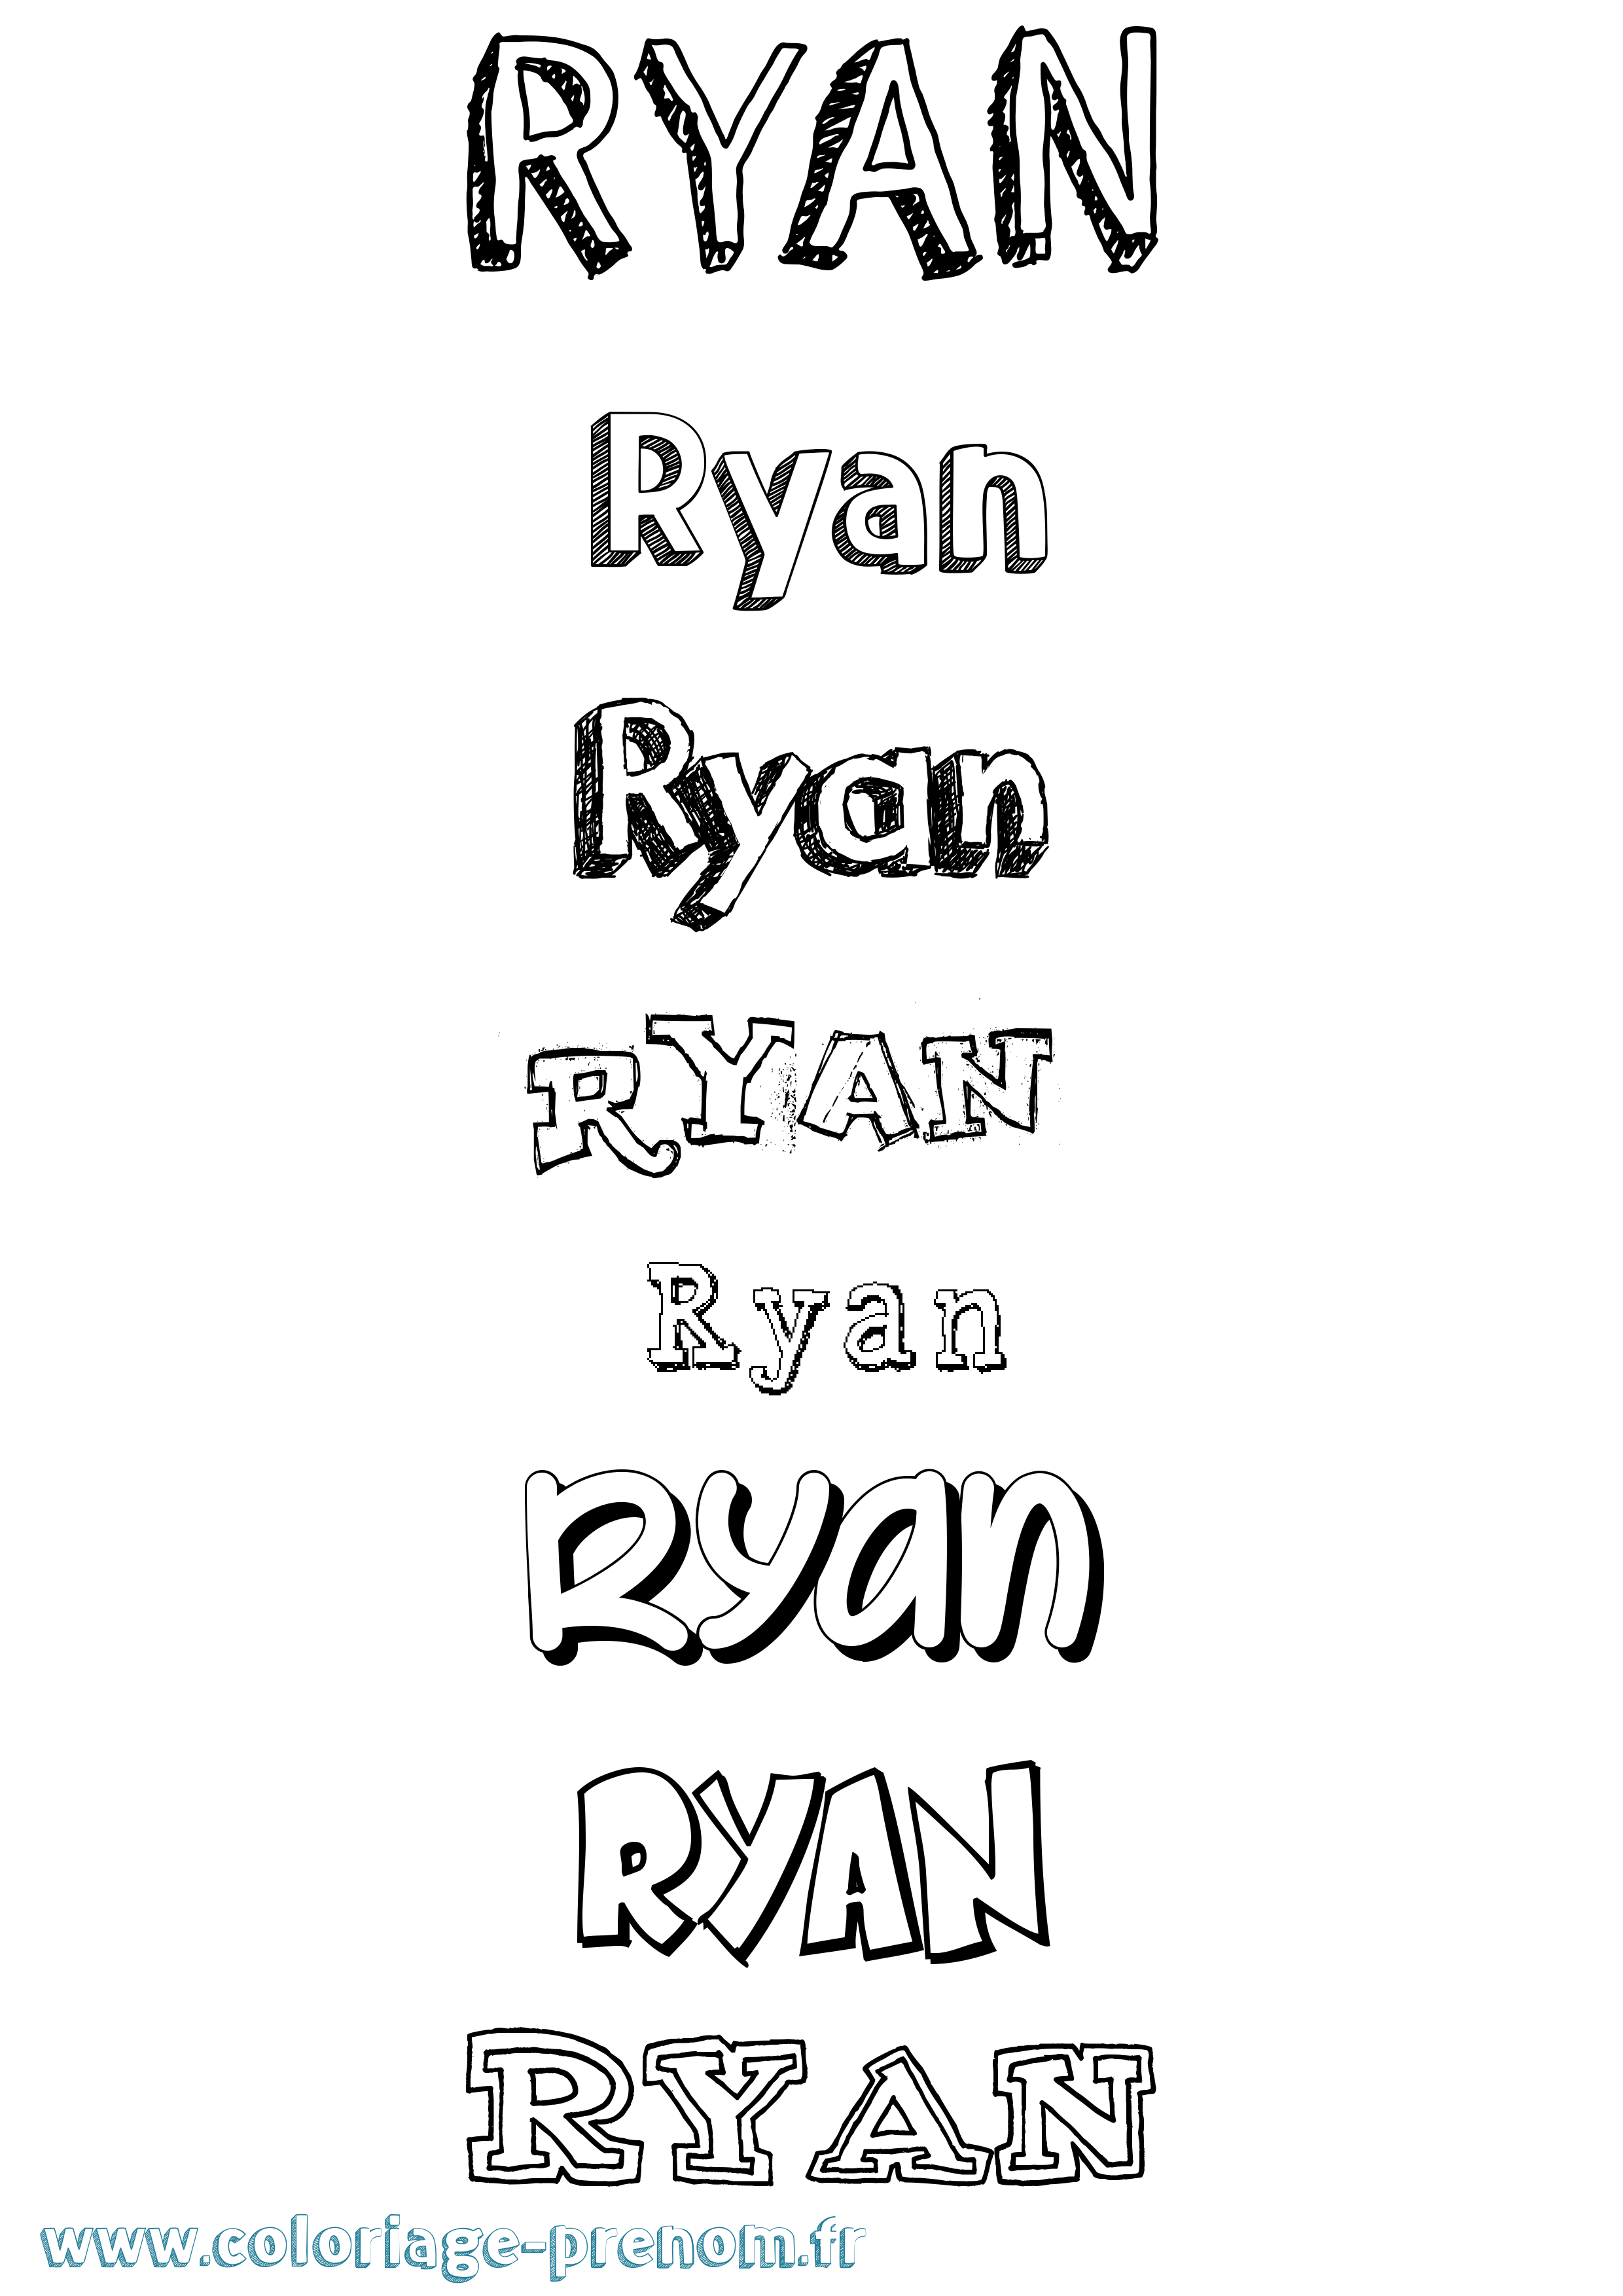 Coloriage prénom Ryan Dessiné